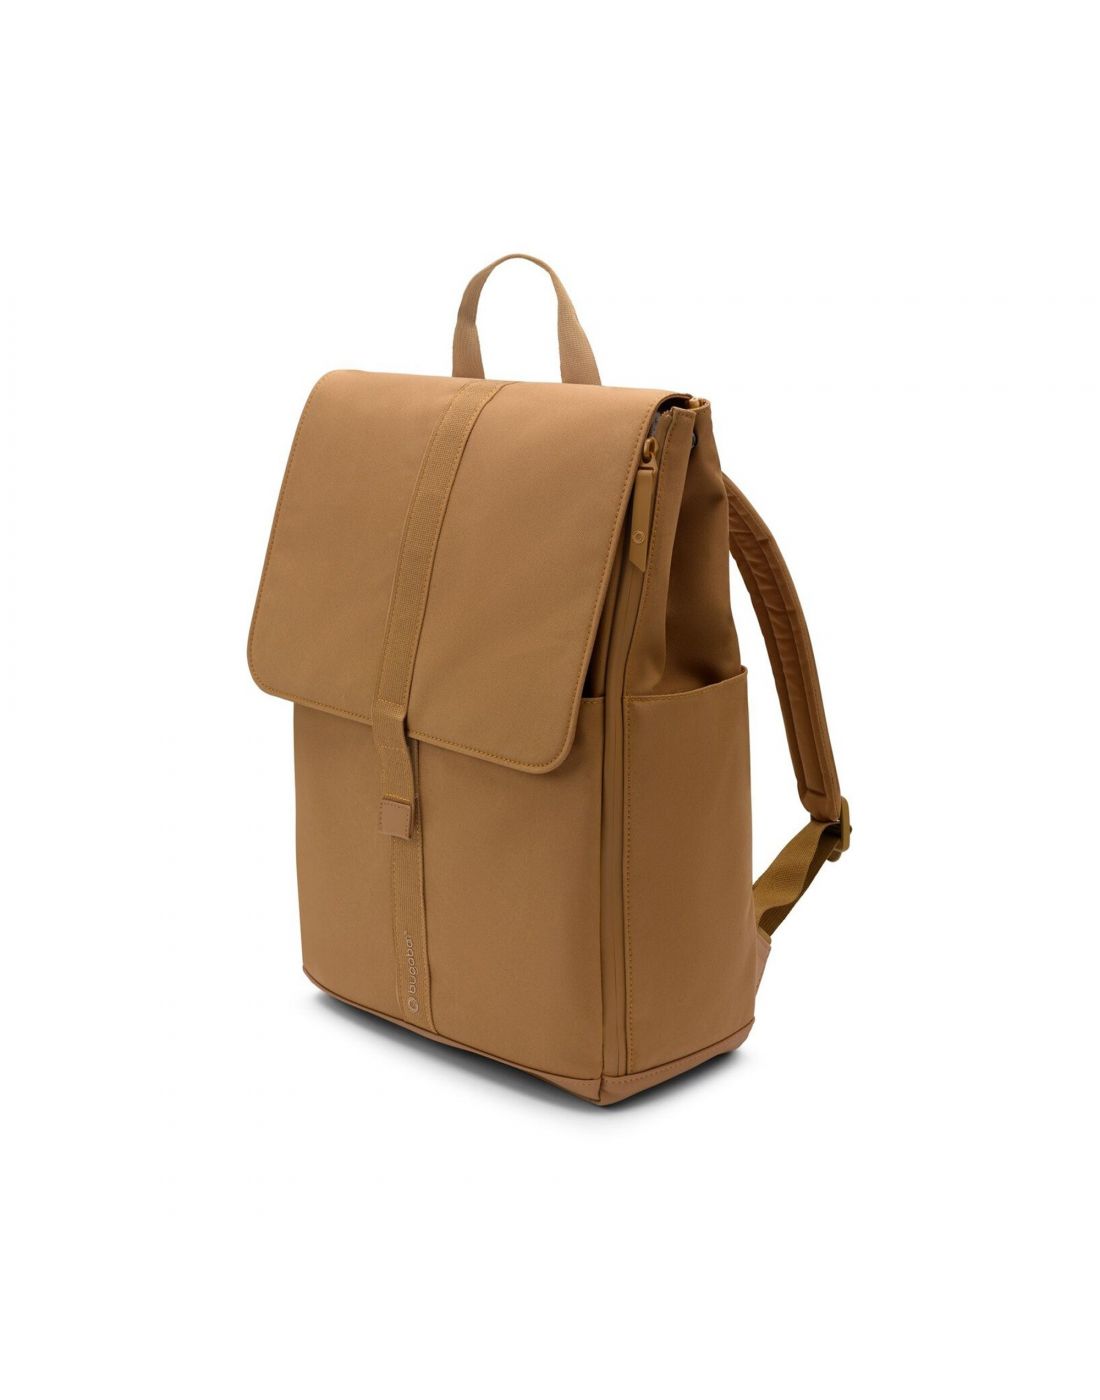 Bugaboo Changing Bag Backpack Caramel Brown